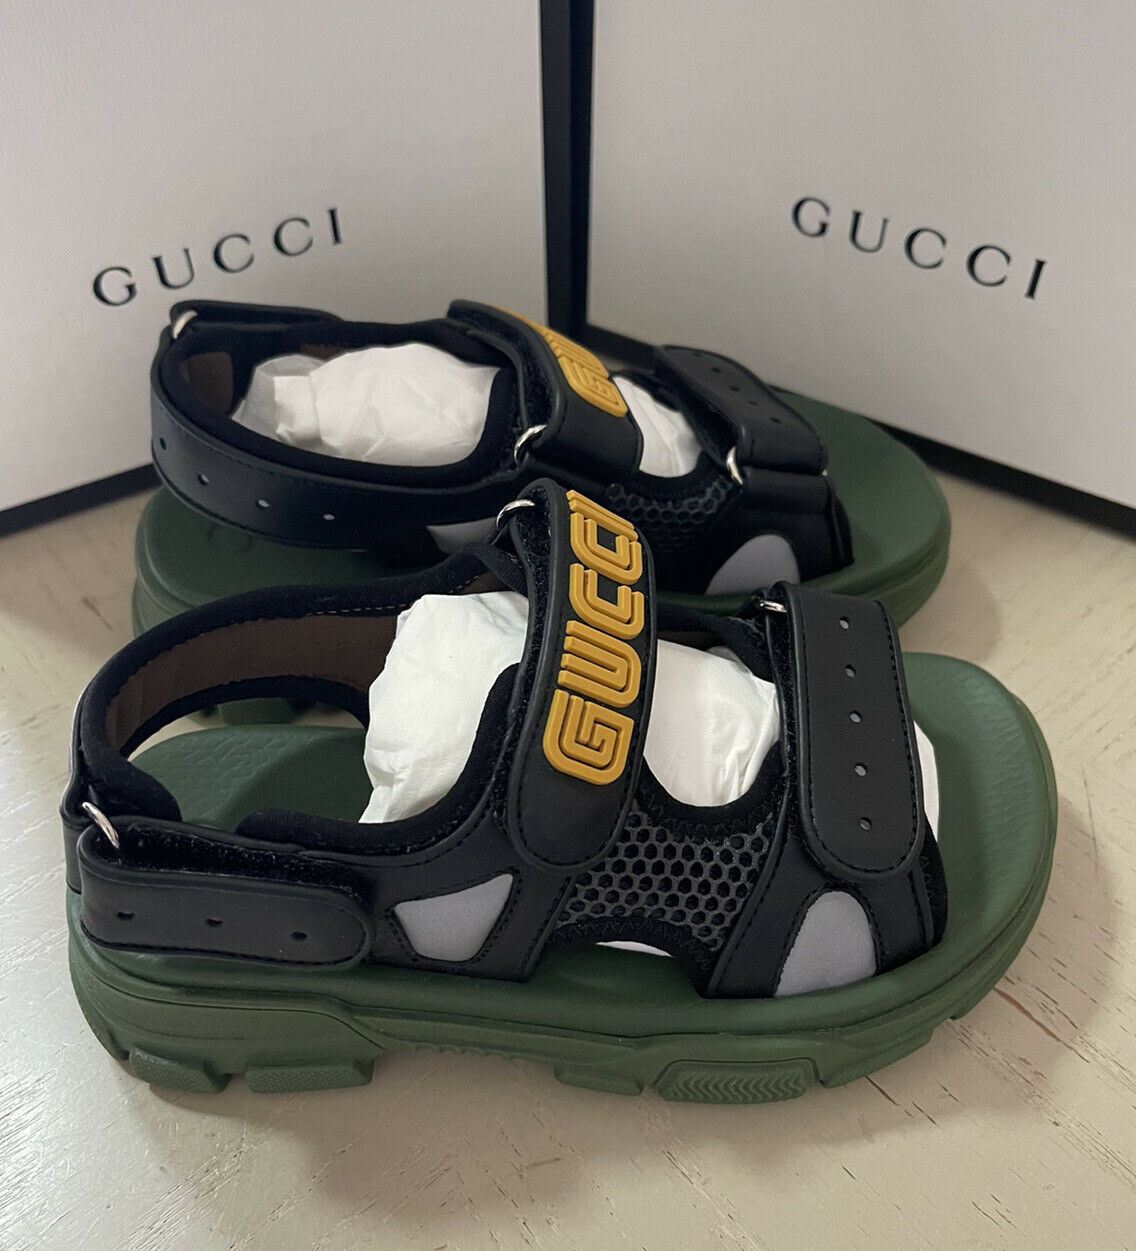 NIB $ 1100 Gucci Kinder-Leder-Sandalenschuhe Schwarz/Grün Größe 31/13 US Alter 6